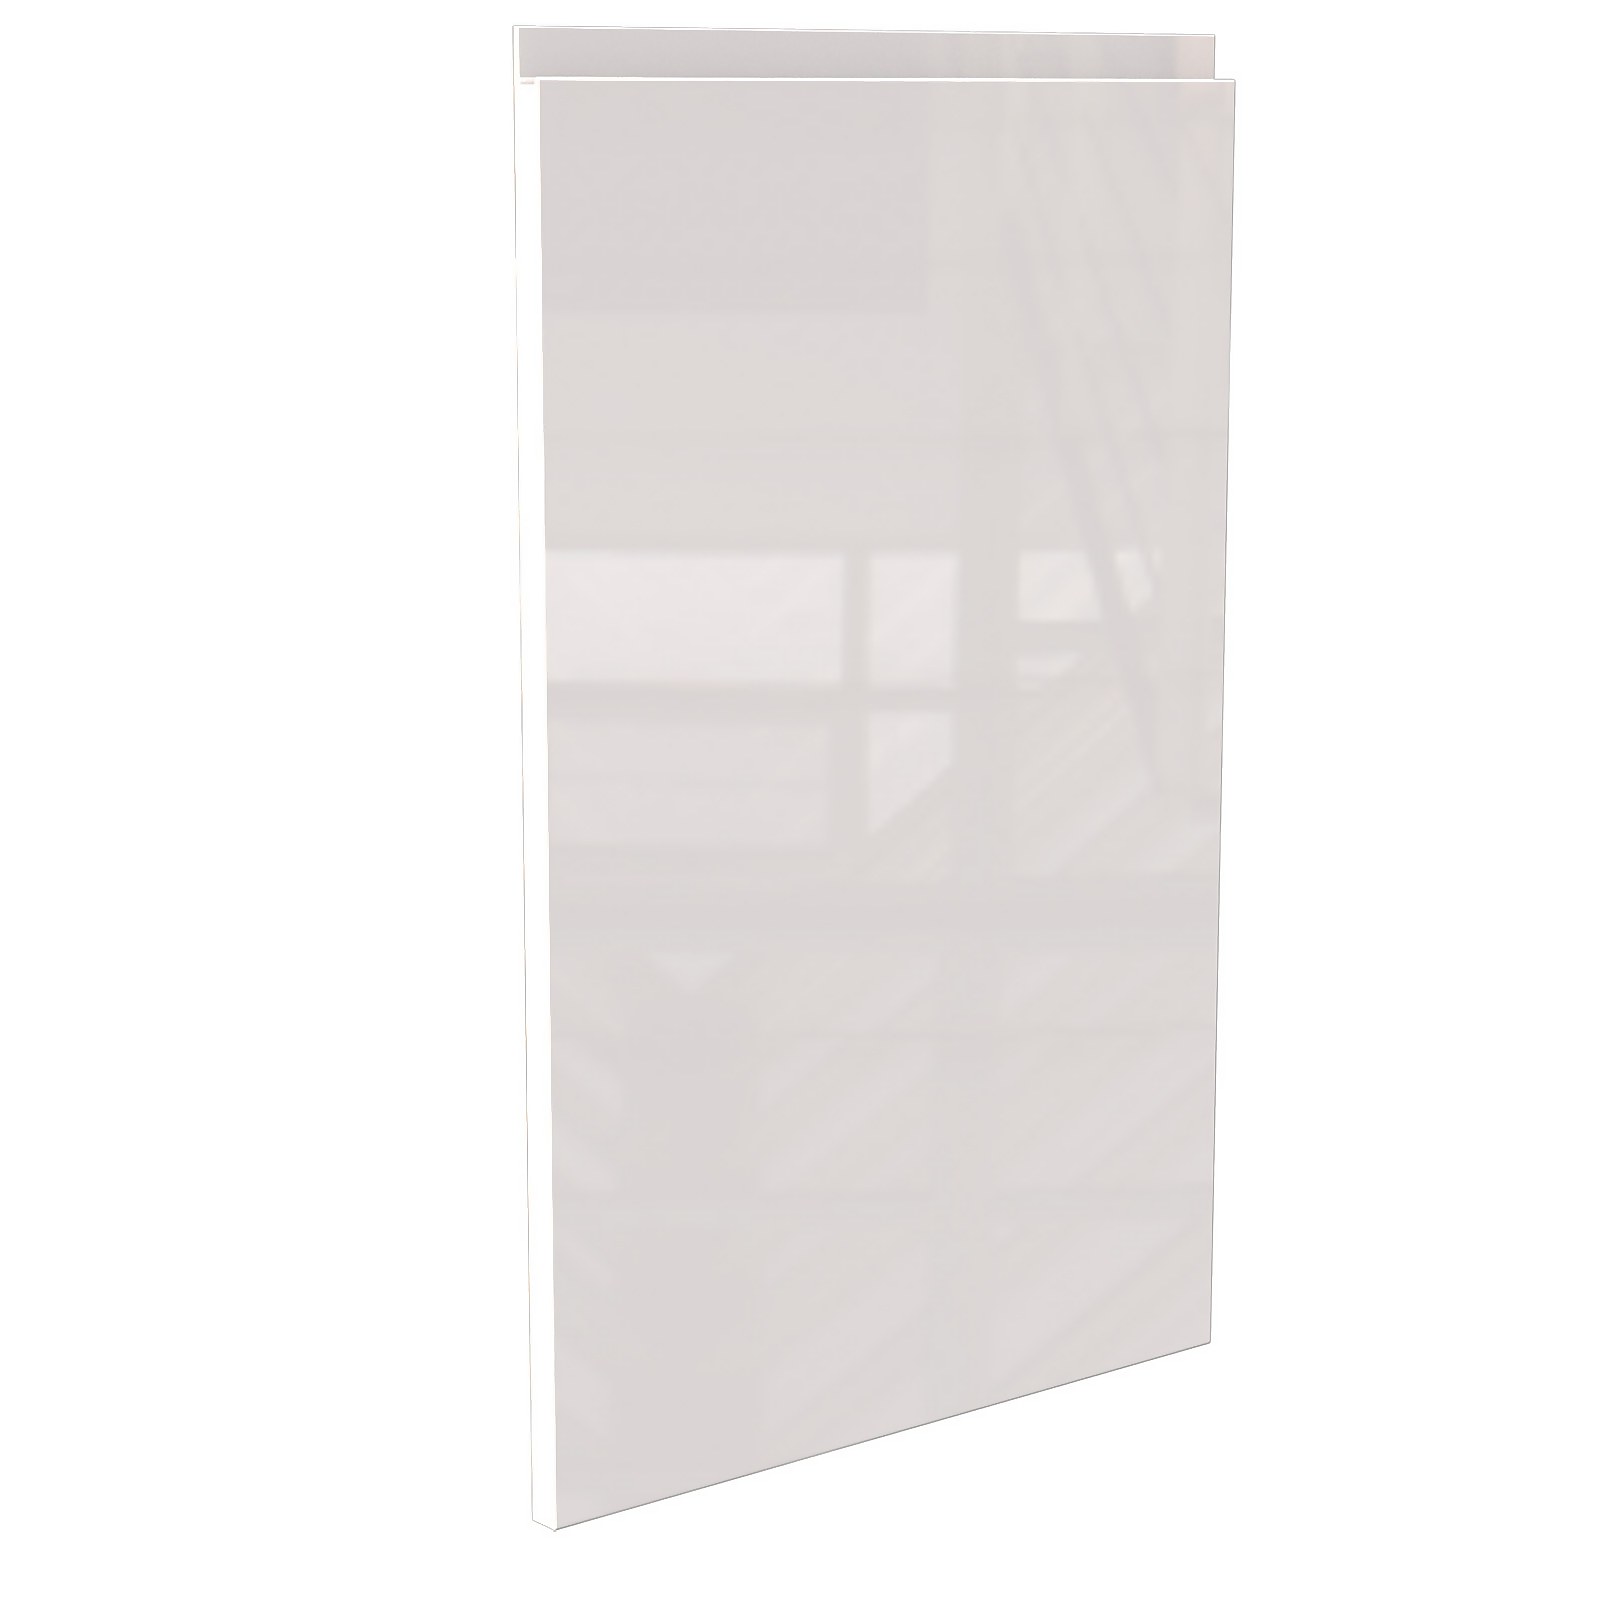 Handleless Kitchen Cabinet Door (W)447mm - Gloss White